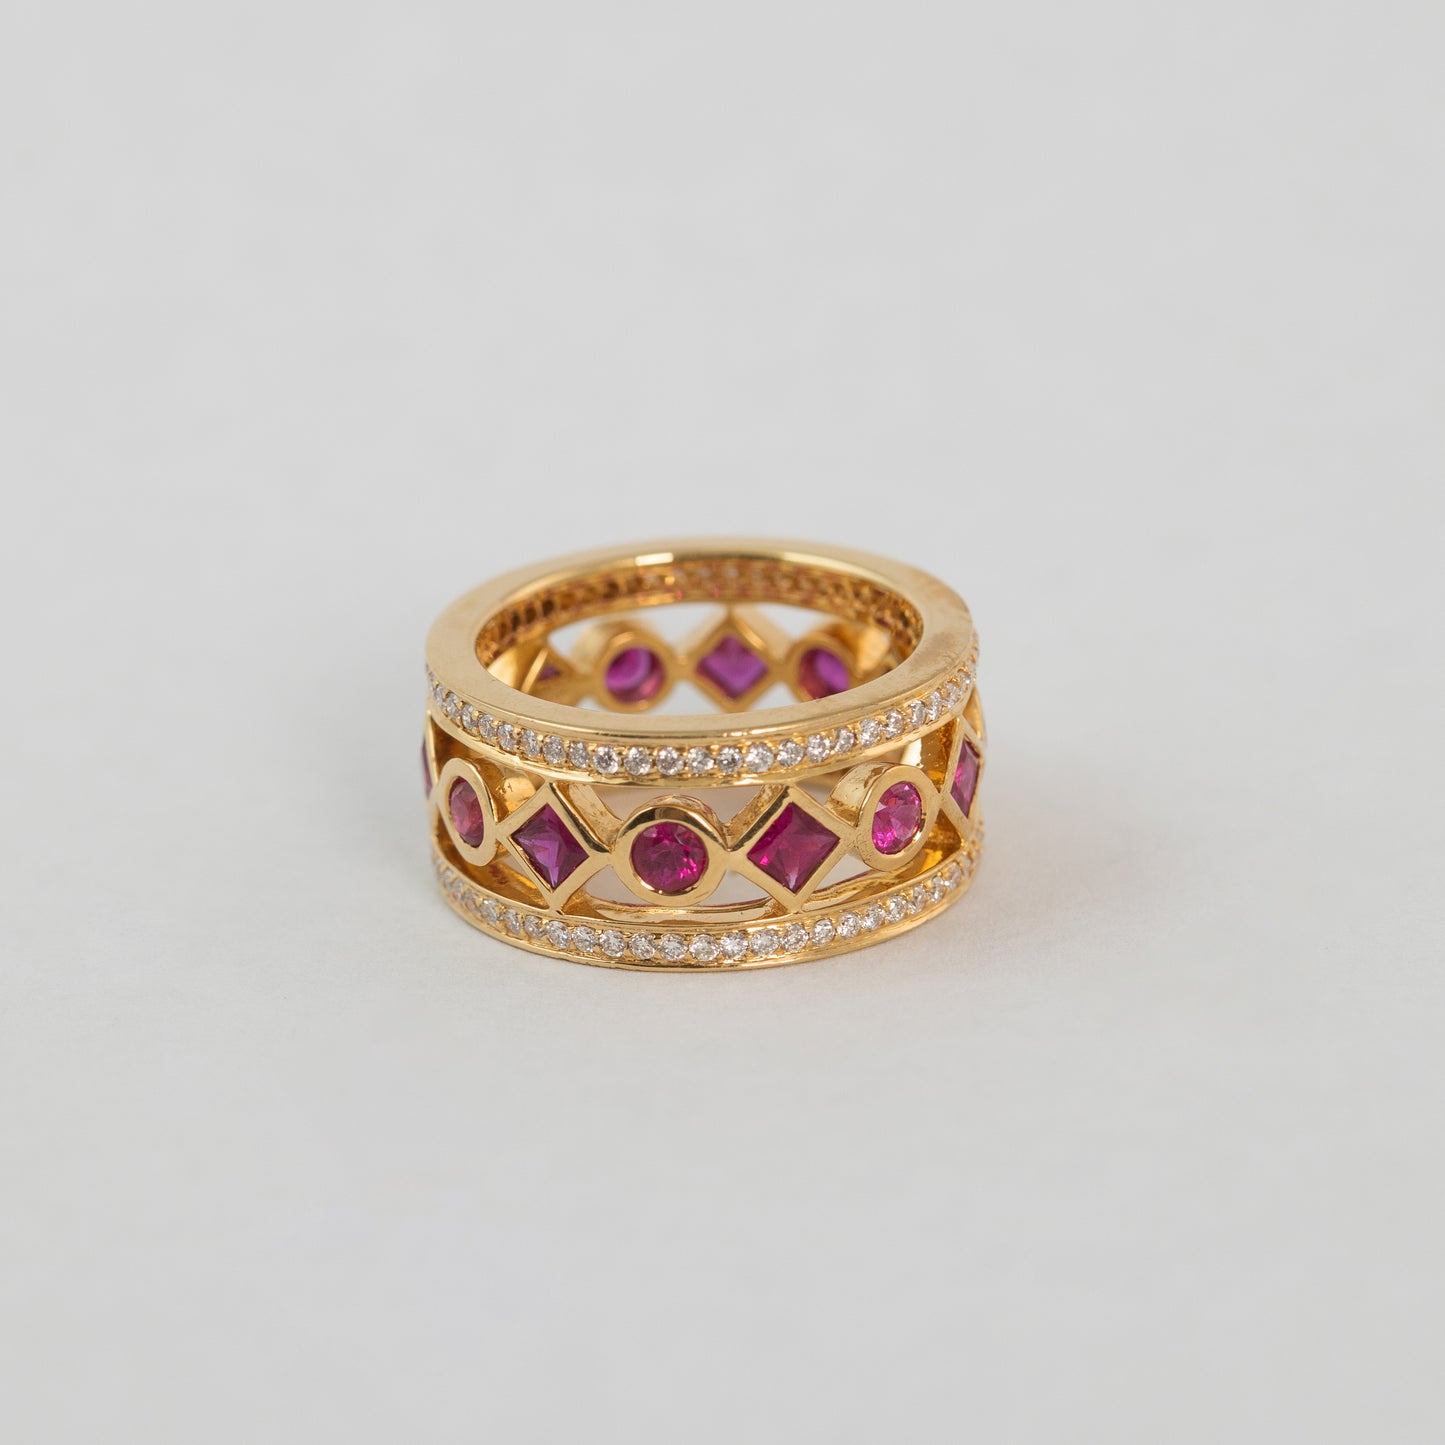 The Royal Ruby Ring